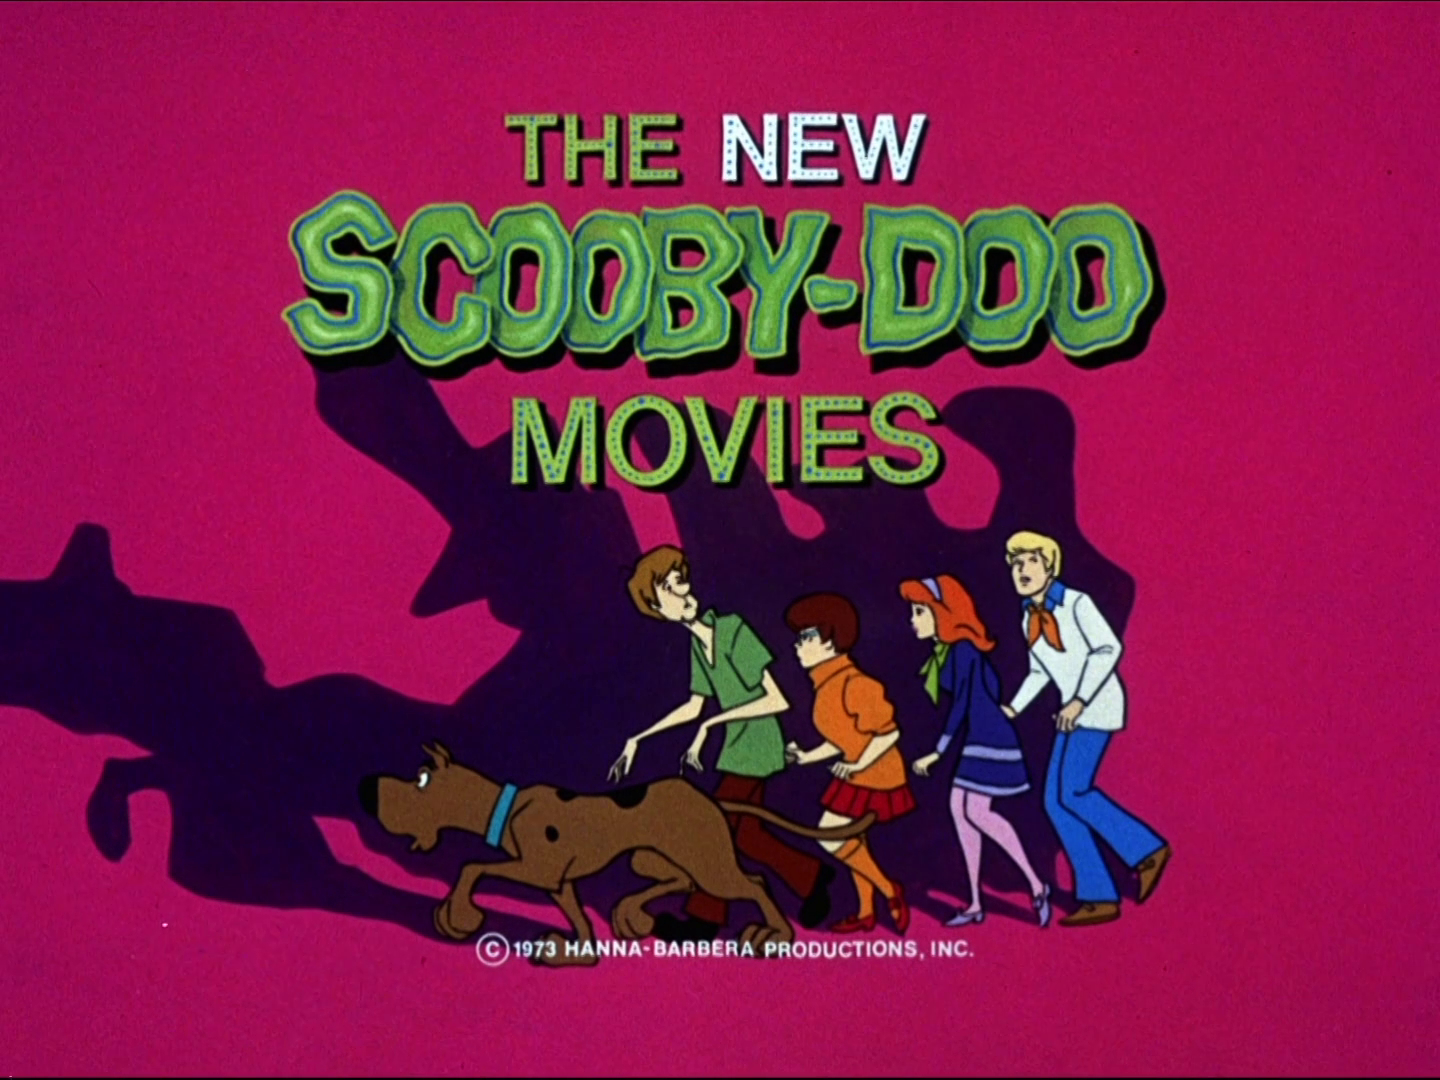 The New Scooby-Doo Movies (Season 2) / The New Scooby-Doo Movies (Season 2) (1973)